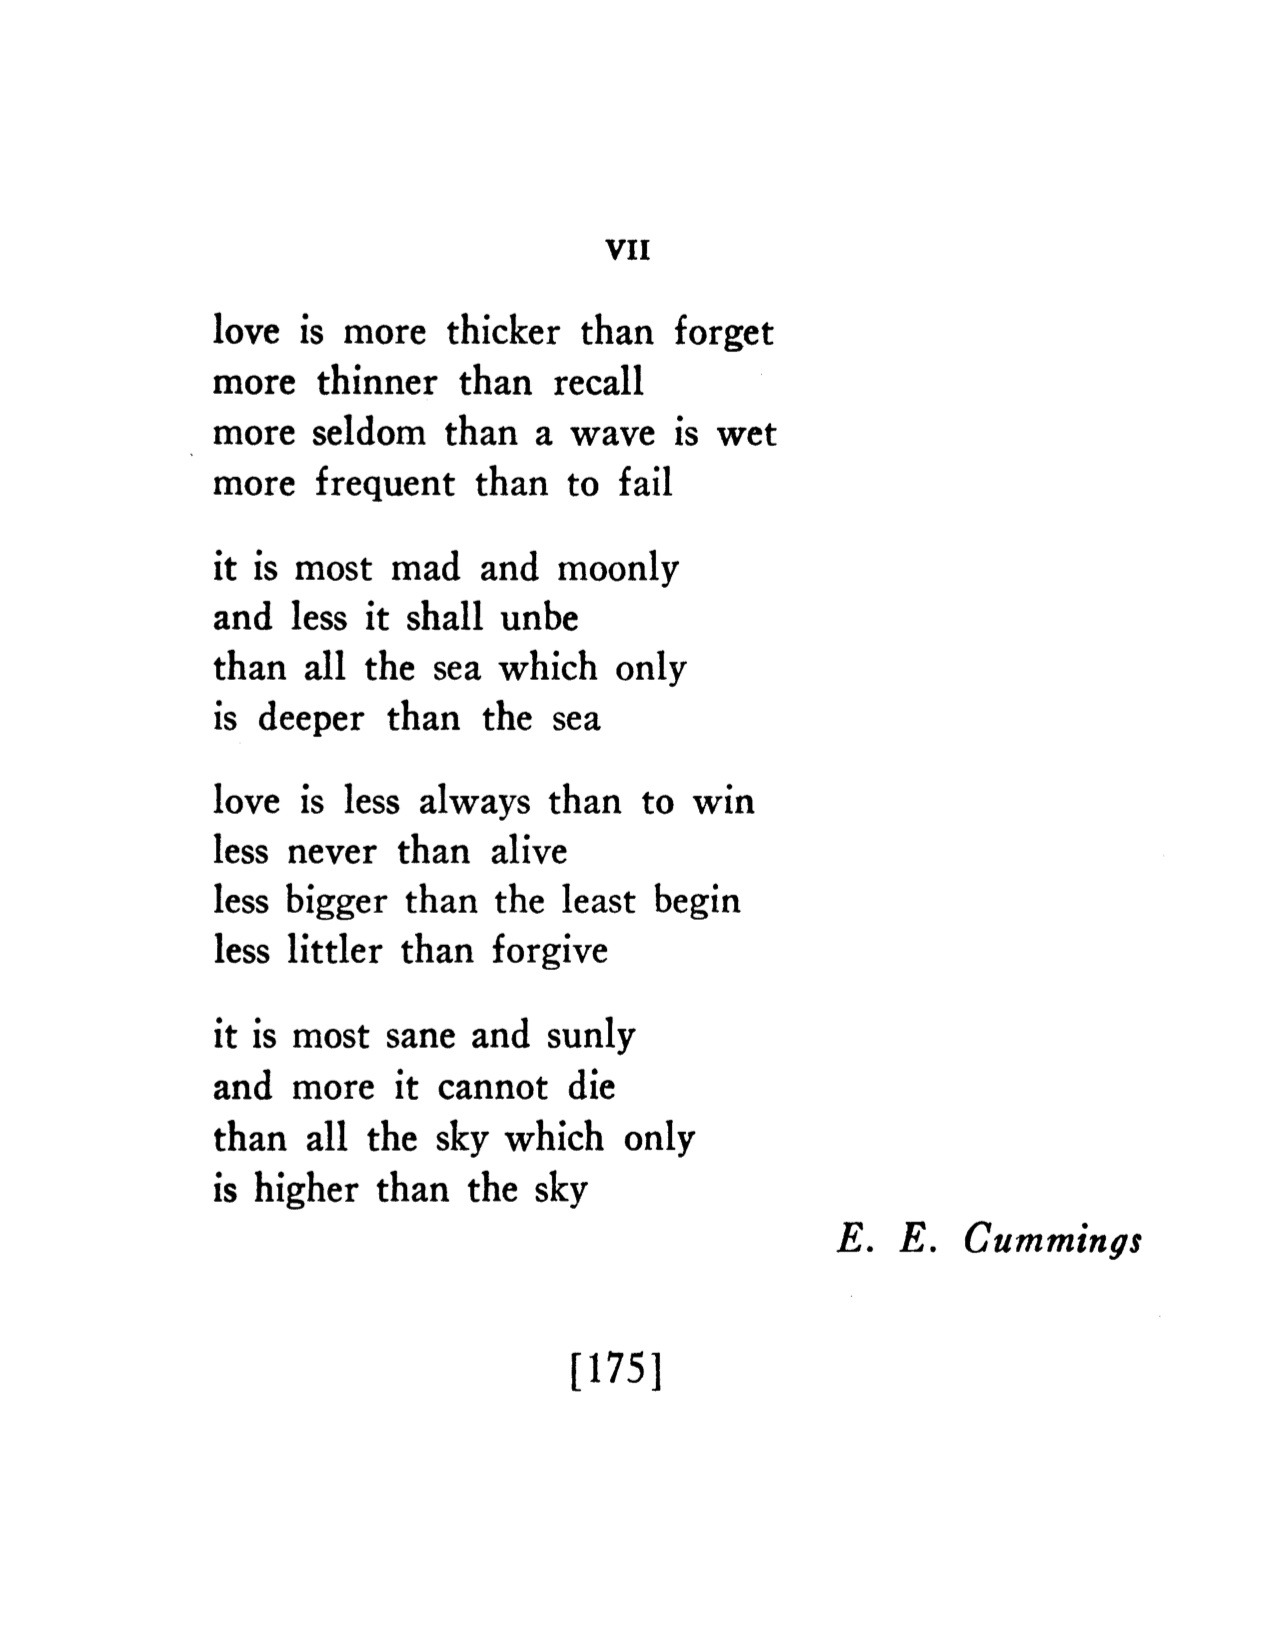 ... since 1912 - â€“E.E. Cummings, Poetry, January 1939 Cummings won